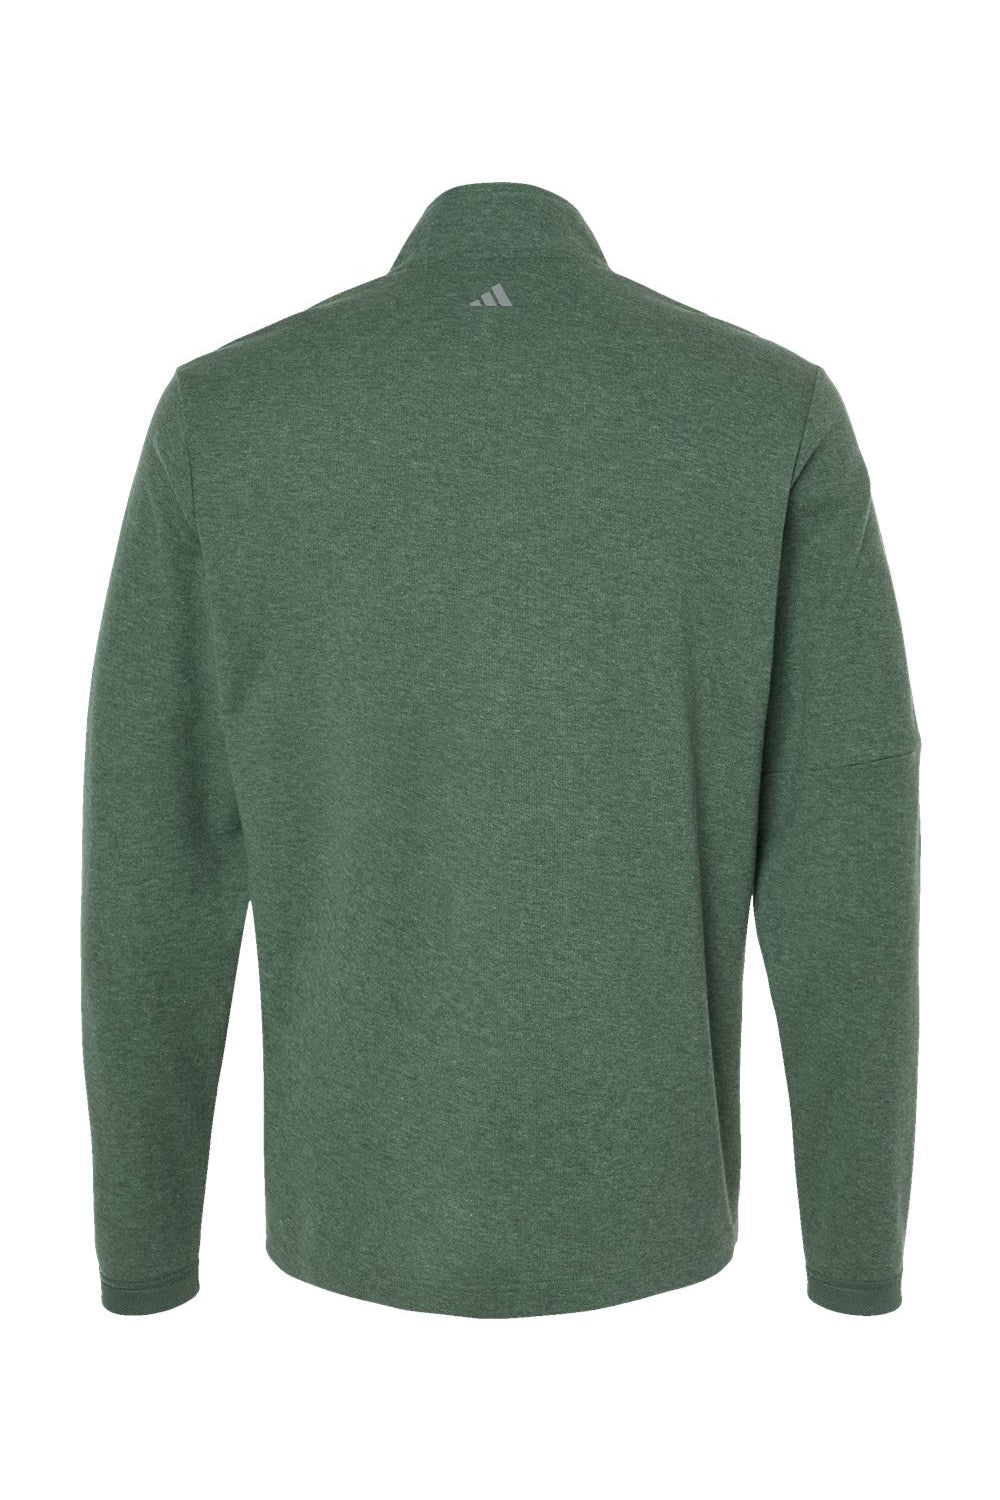 Adidas A554 Mens 3 Stripes Moisture Wicking 1/4 Zip Sweater Green Oxide Melange Flat Back